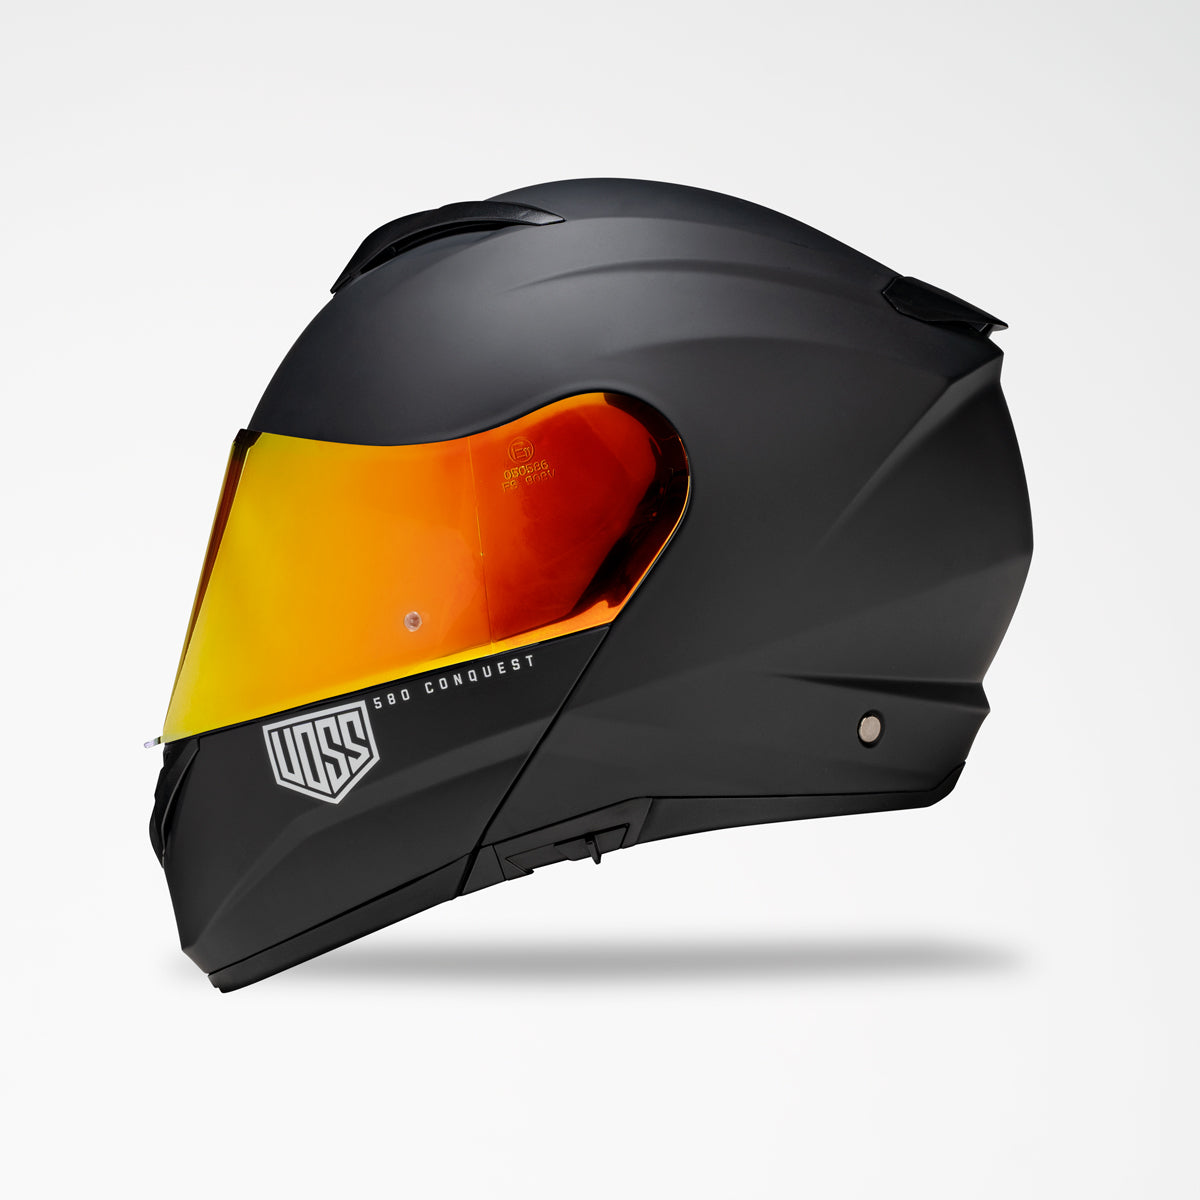 Voss 580 Conquest Black Helmet